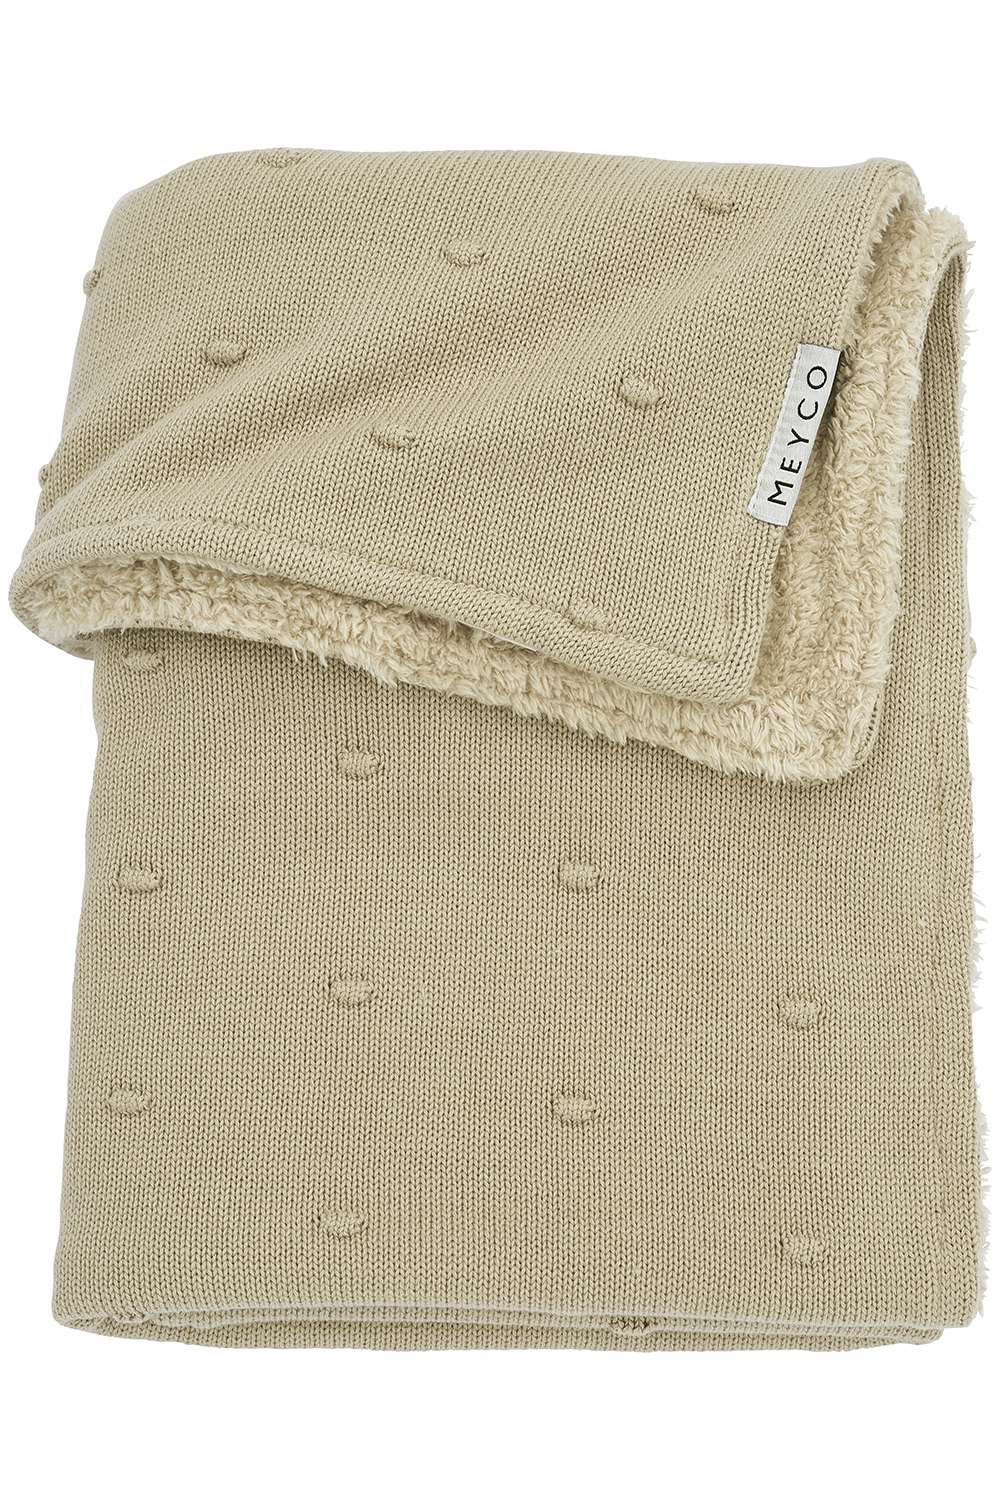 Cot bed blanket Mini Knots teddy - sand - 100x150cm